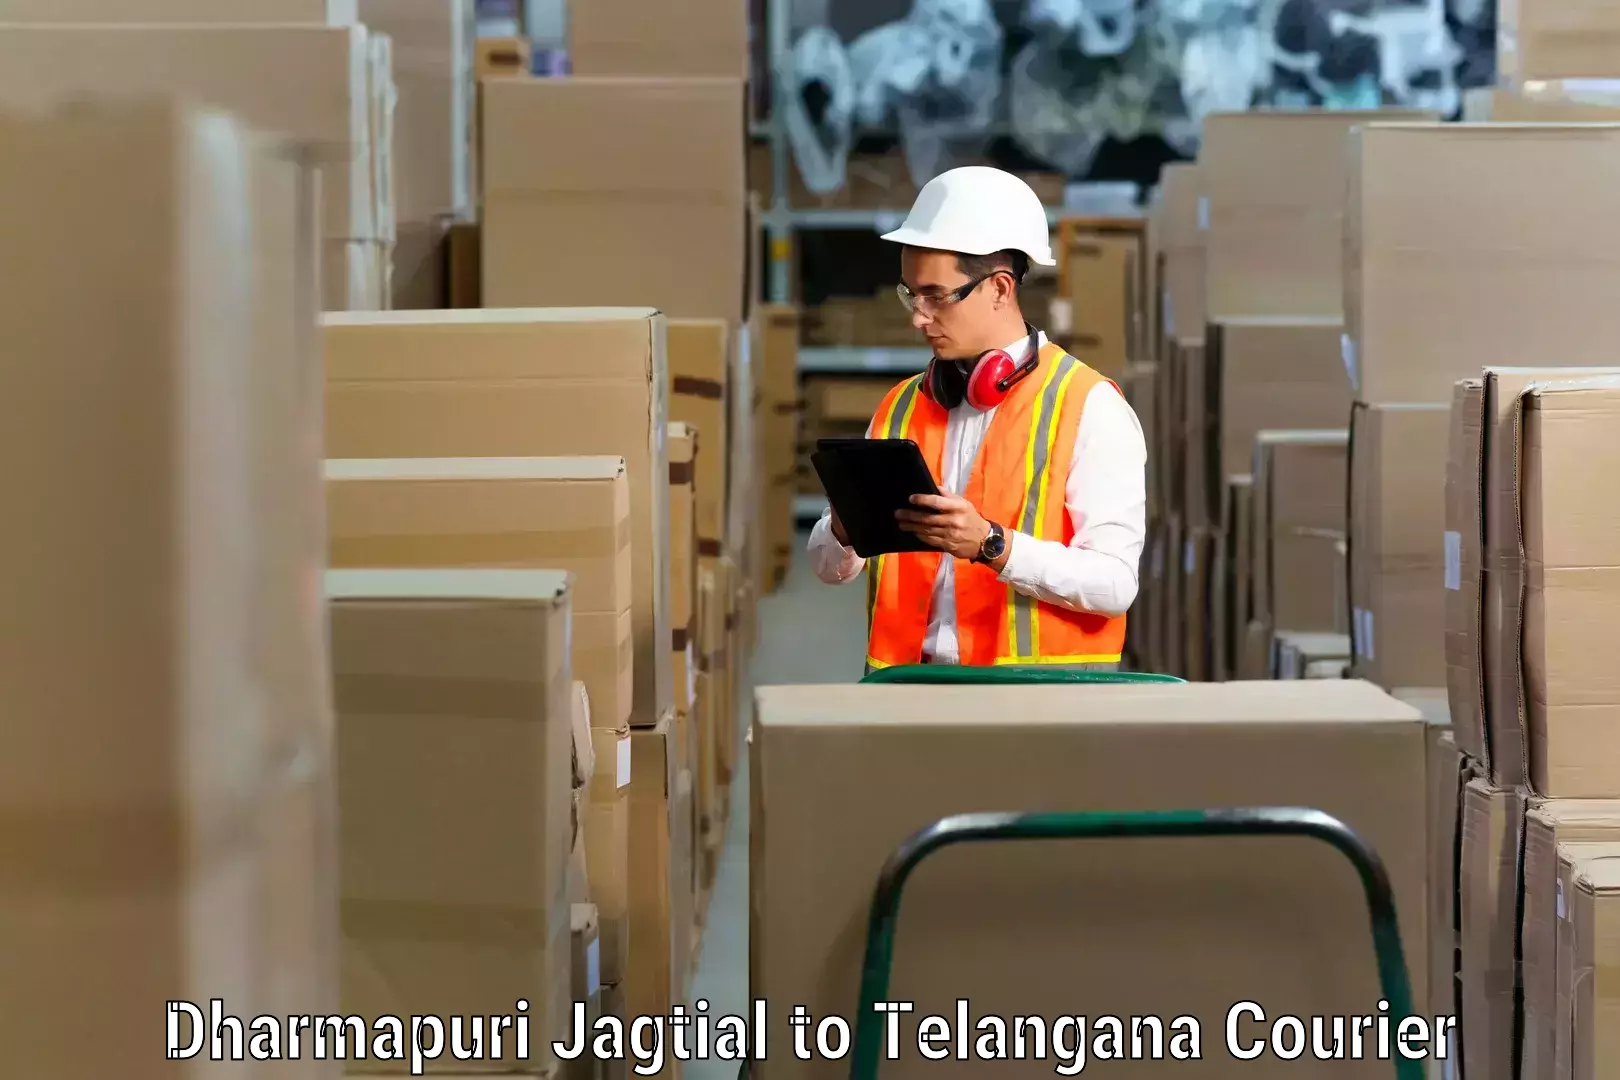 Professional furniture movers Dharmapuri Jagtial to Rayaparthi